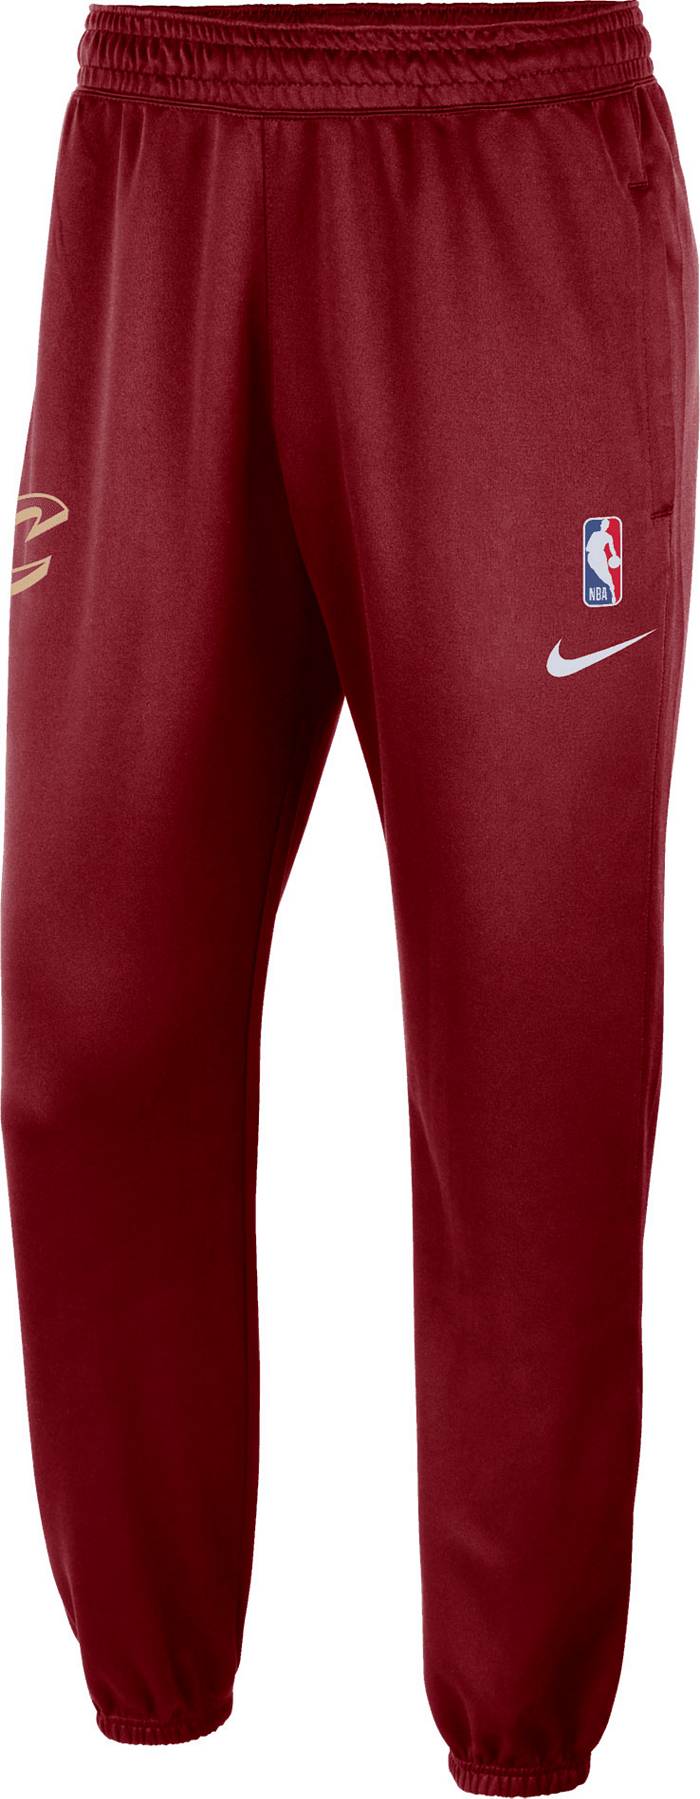 Nike Cleveland Cavaliers Donovan Mitchell #45 Red Dri-FIT Swingman Jersey